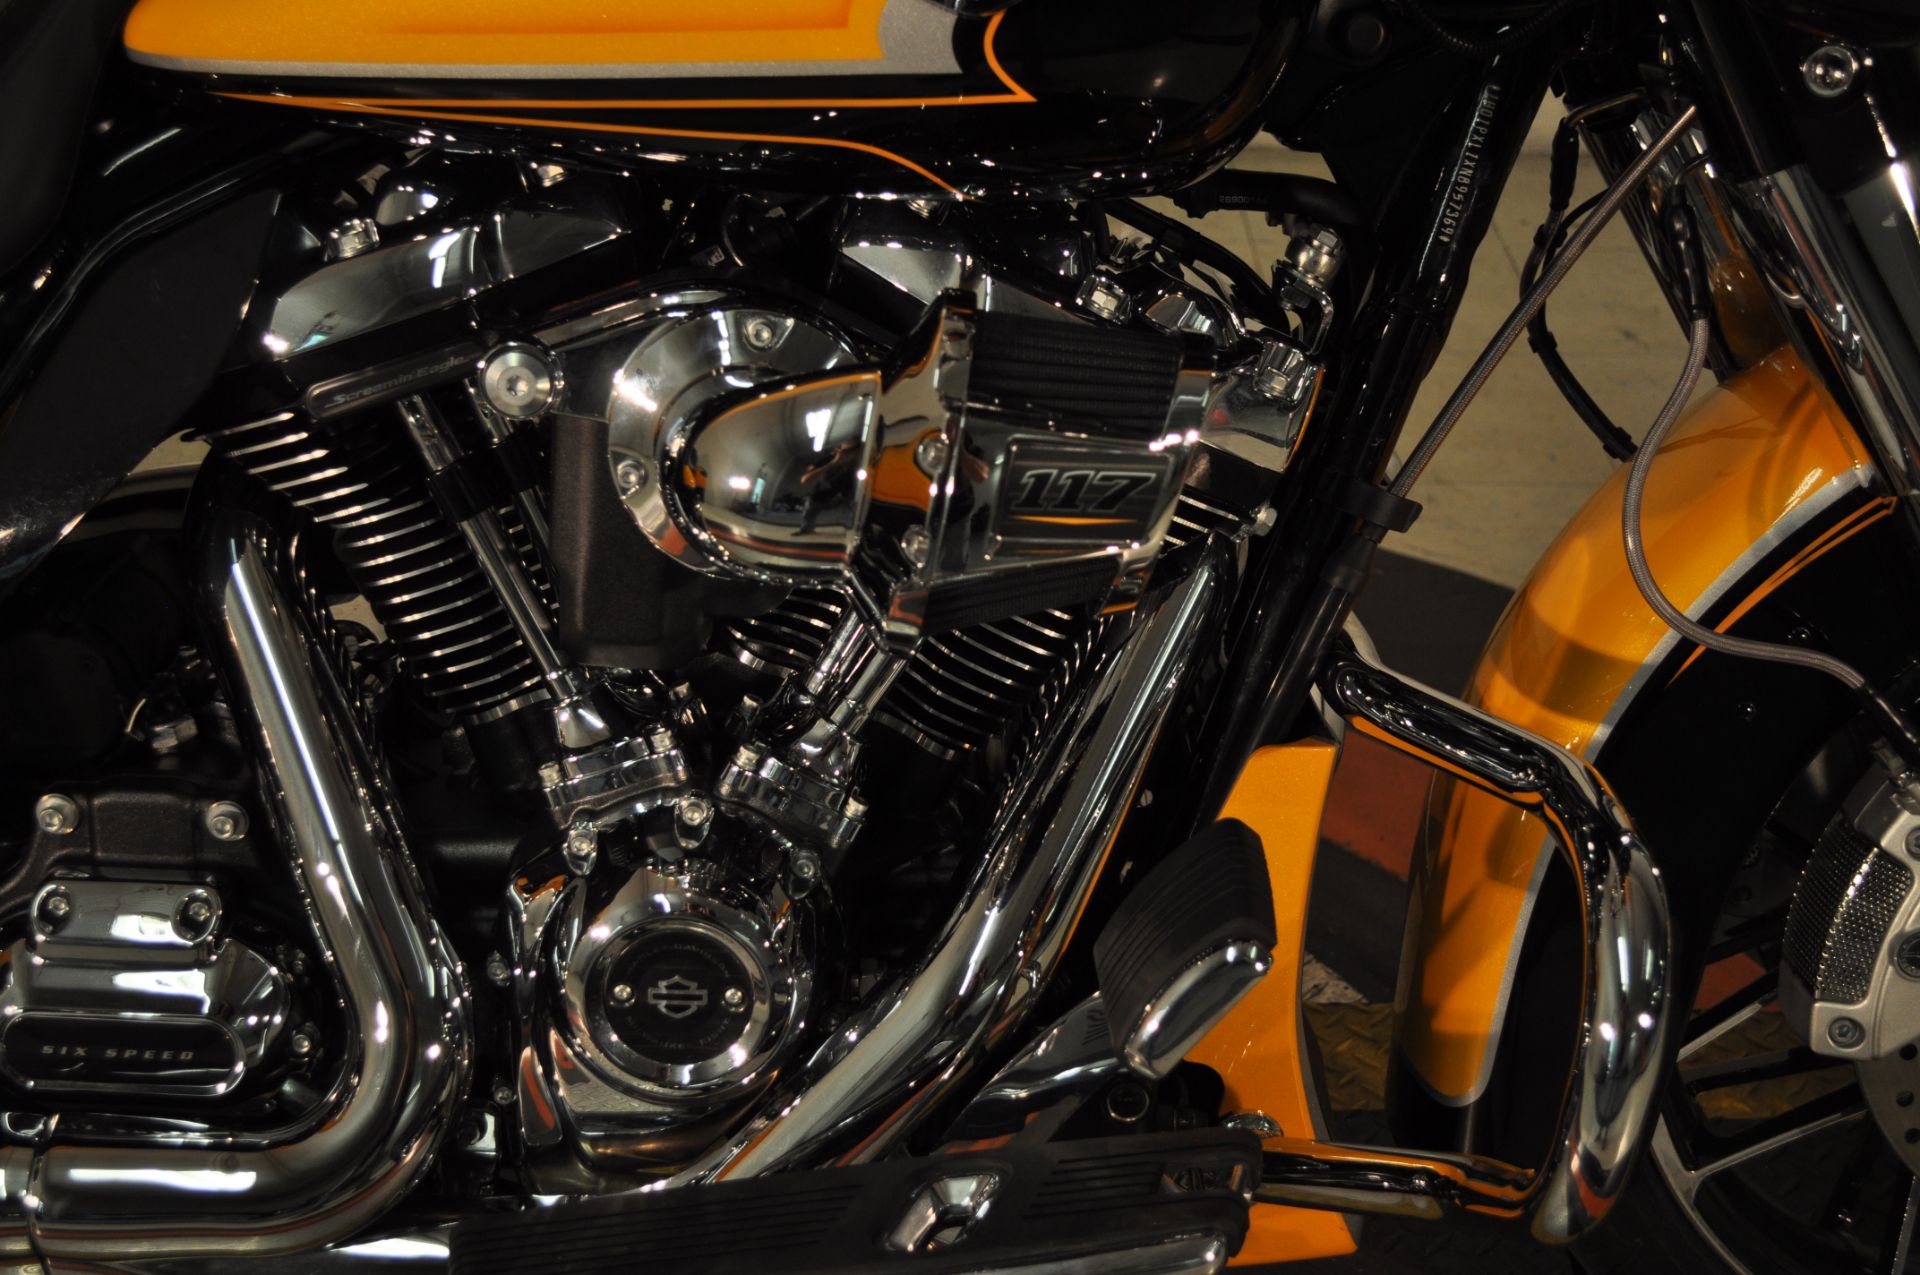 2022 Harley-Davidson CVO™ Street Glide® in Winston Salem, North Carolina - Photo 5